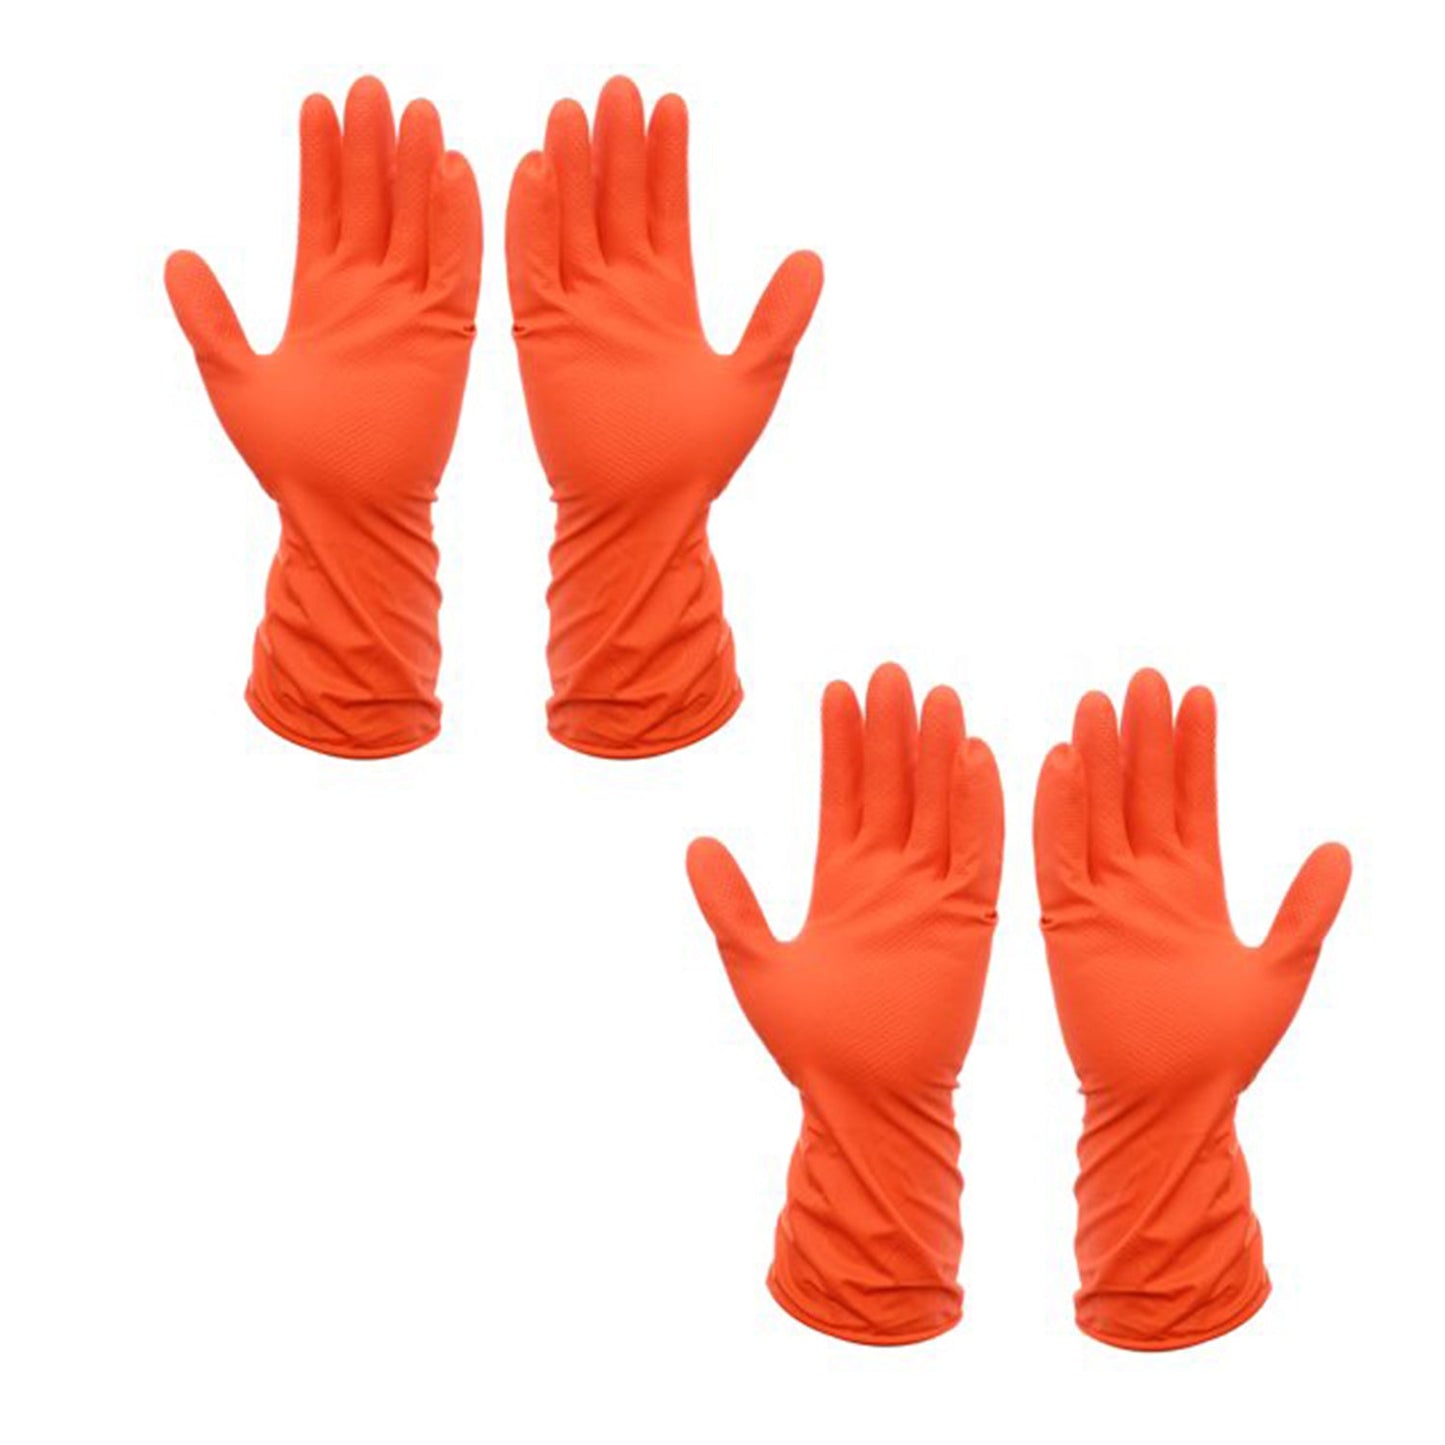 4852 2 Pair Medium Orange  Gloves For Types Of Purposes Like Washing Utensils, Gardening And Cleaning Toilet Etc. DeoDap